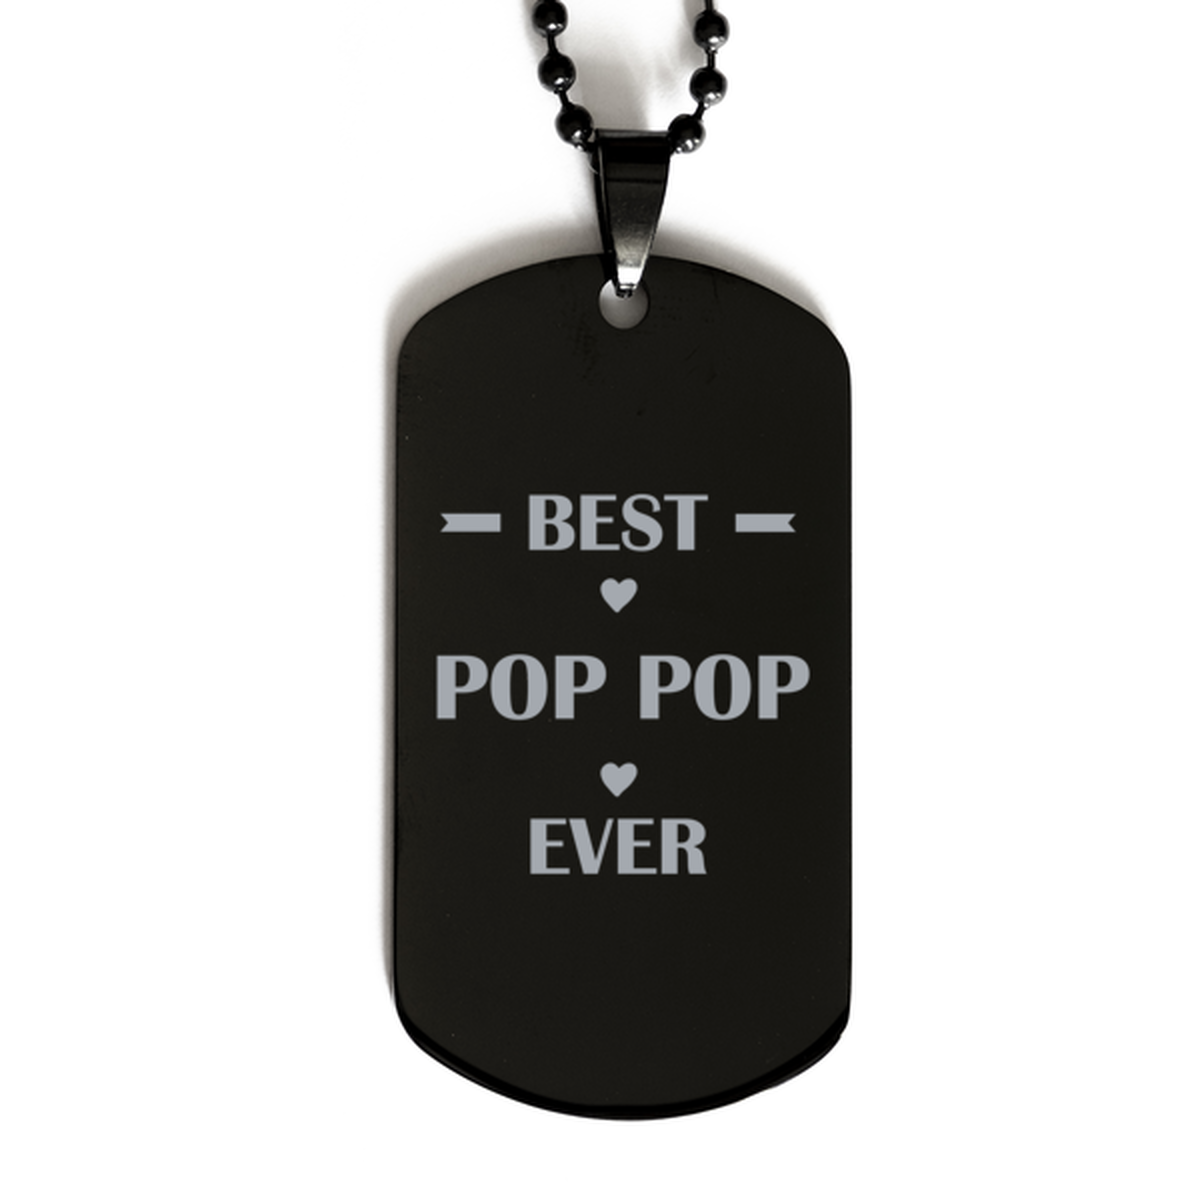 Best Pop Pop Ever Pop Pop Gifts, Funny Black Dog Tag For Pop Pop, Birthday Family Presents Engraved Necklace For Men